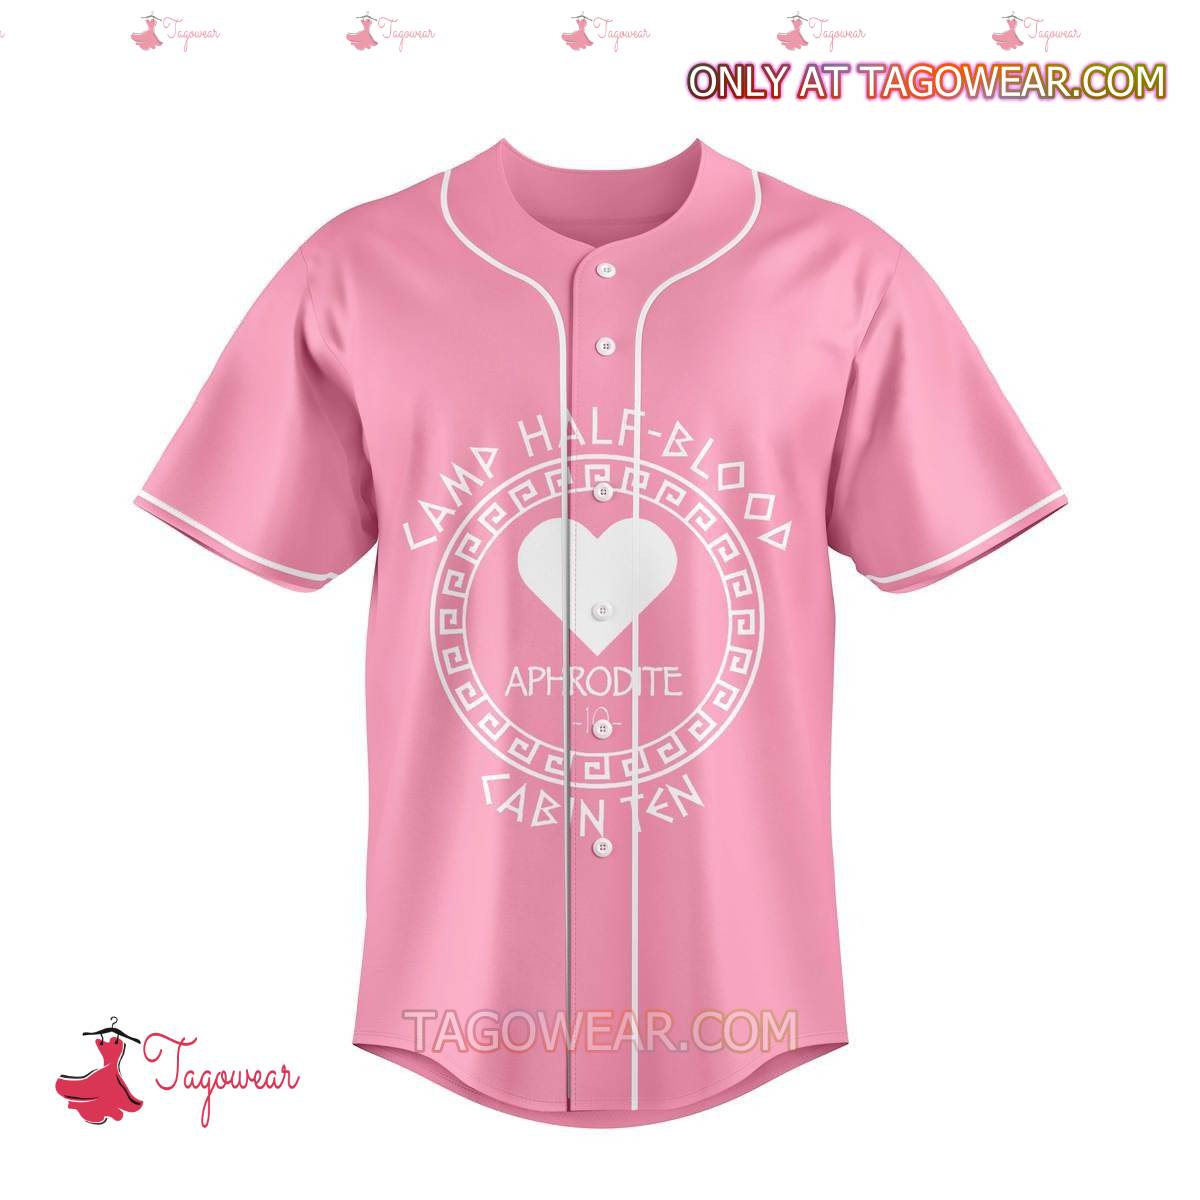 Camp Half Blood Cabin Ten Aphrodite Personalized Baseball Jersey a